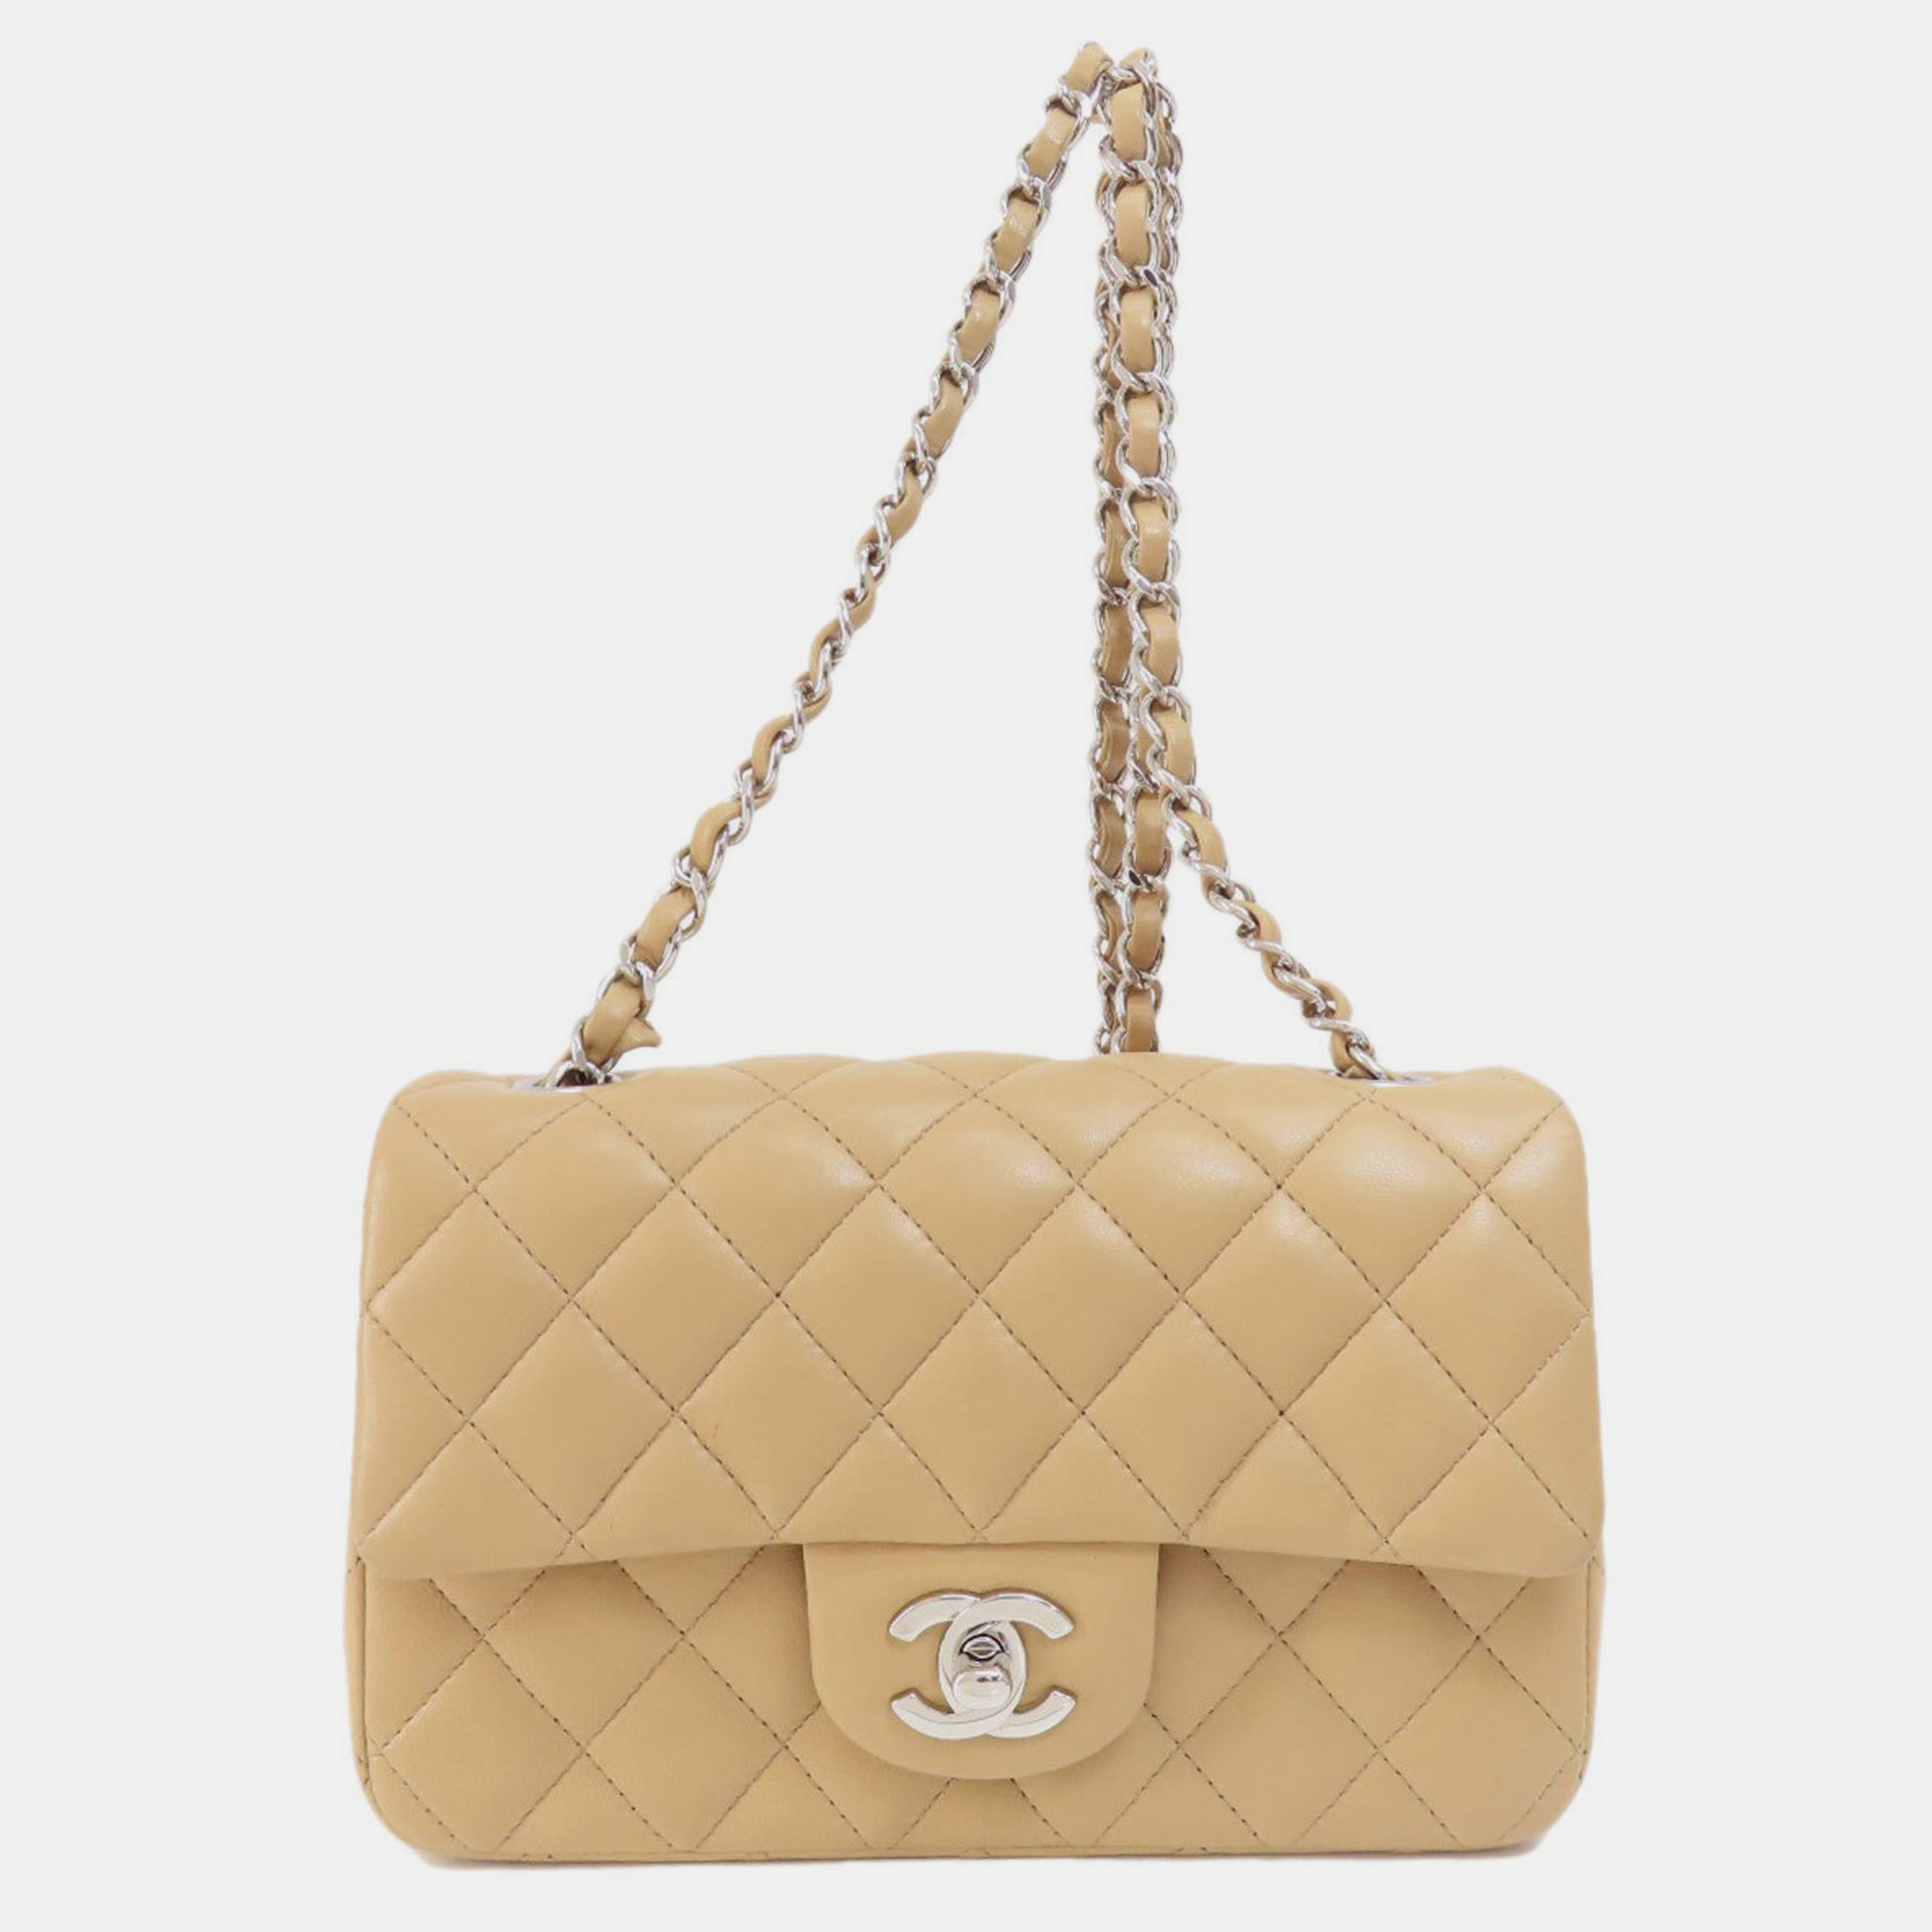 Chanel beige leather mini classic single flap shoulder bags